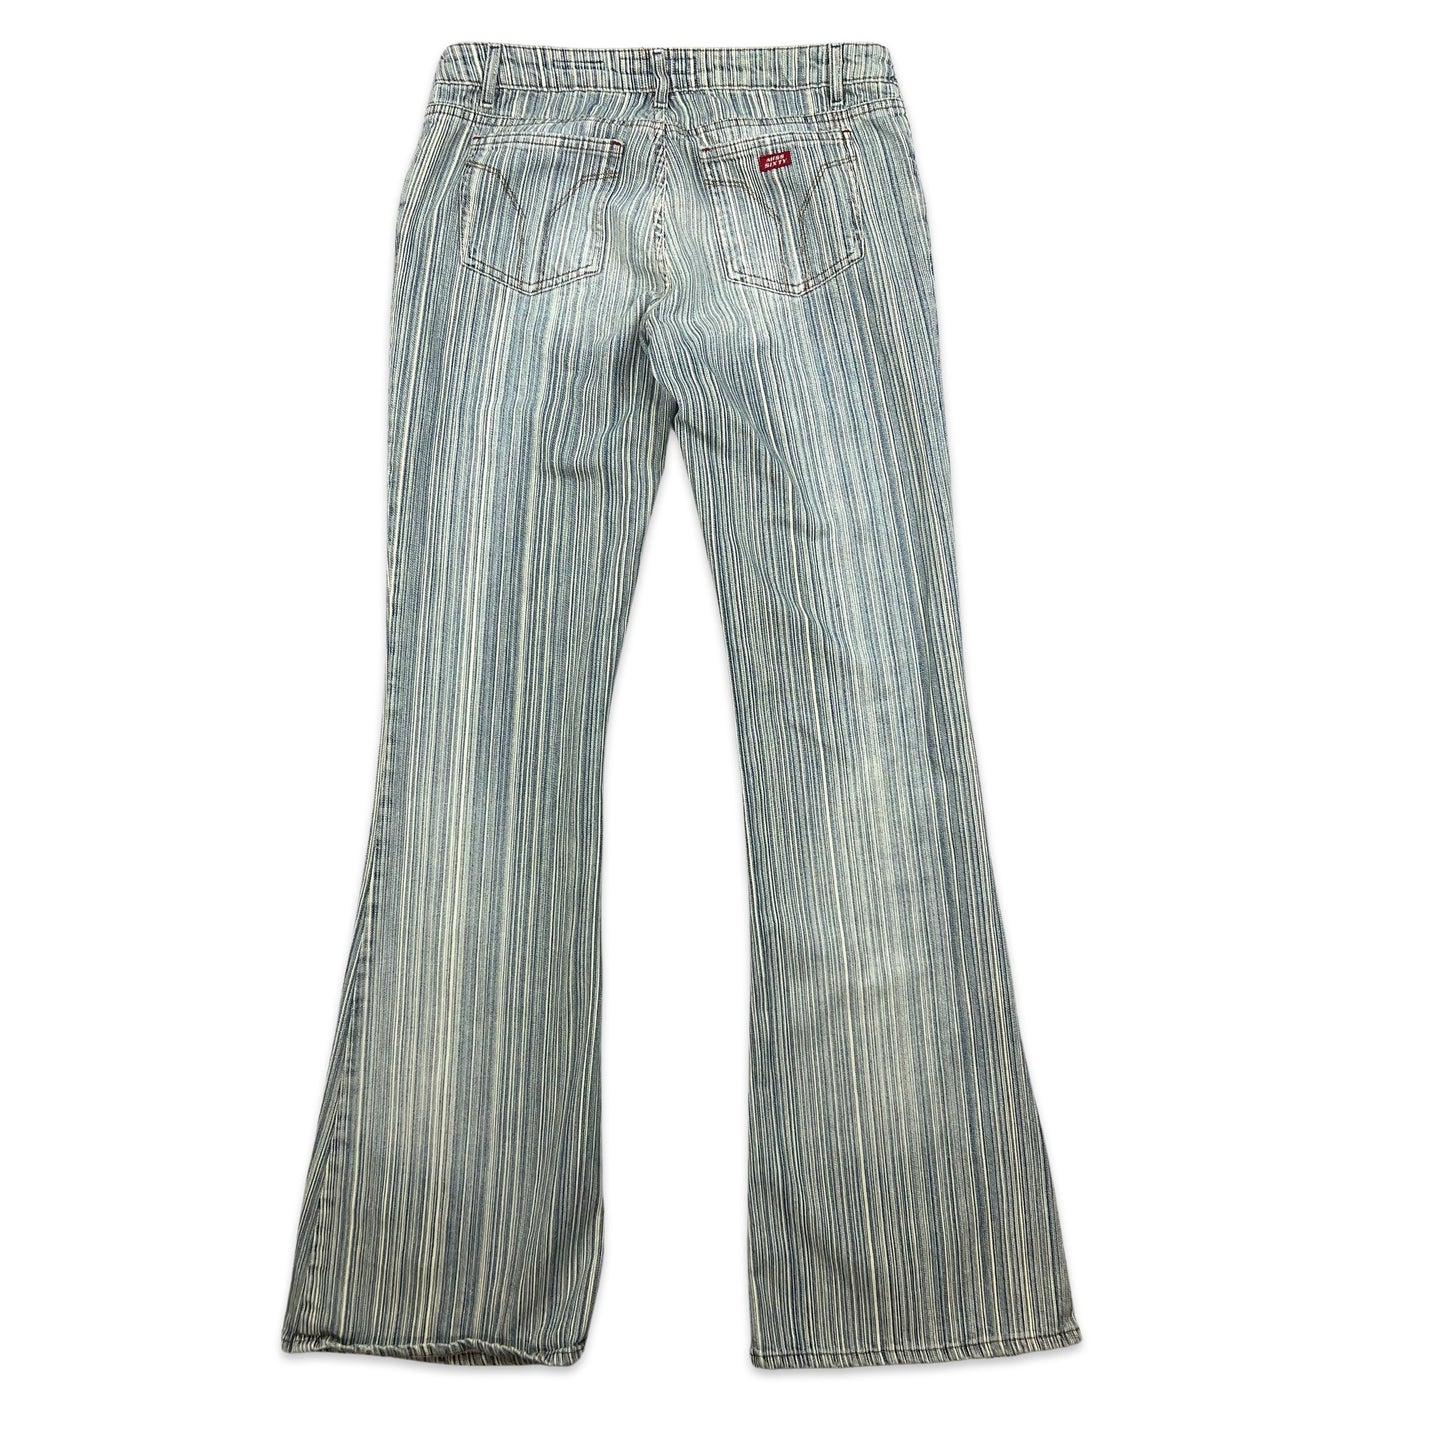 Vintage Y2K Miss Sixty Light Blue & White Striped Flared Jeans